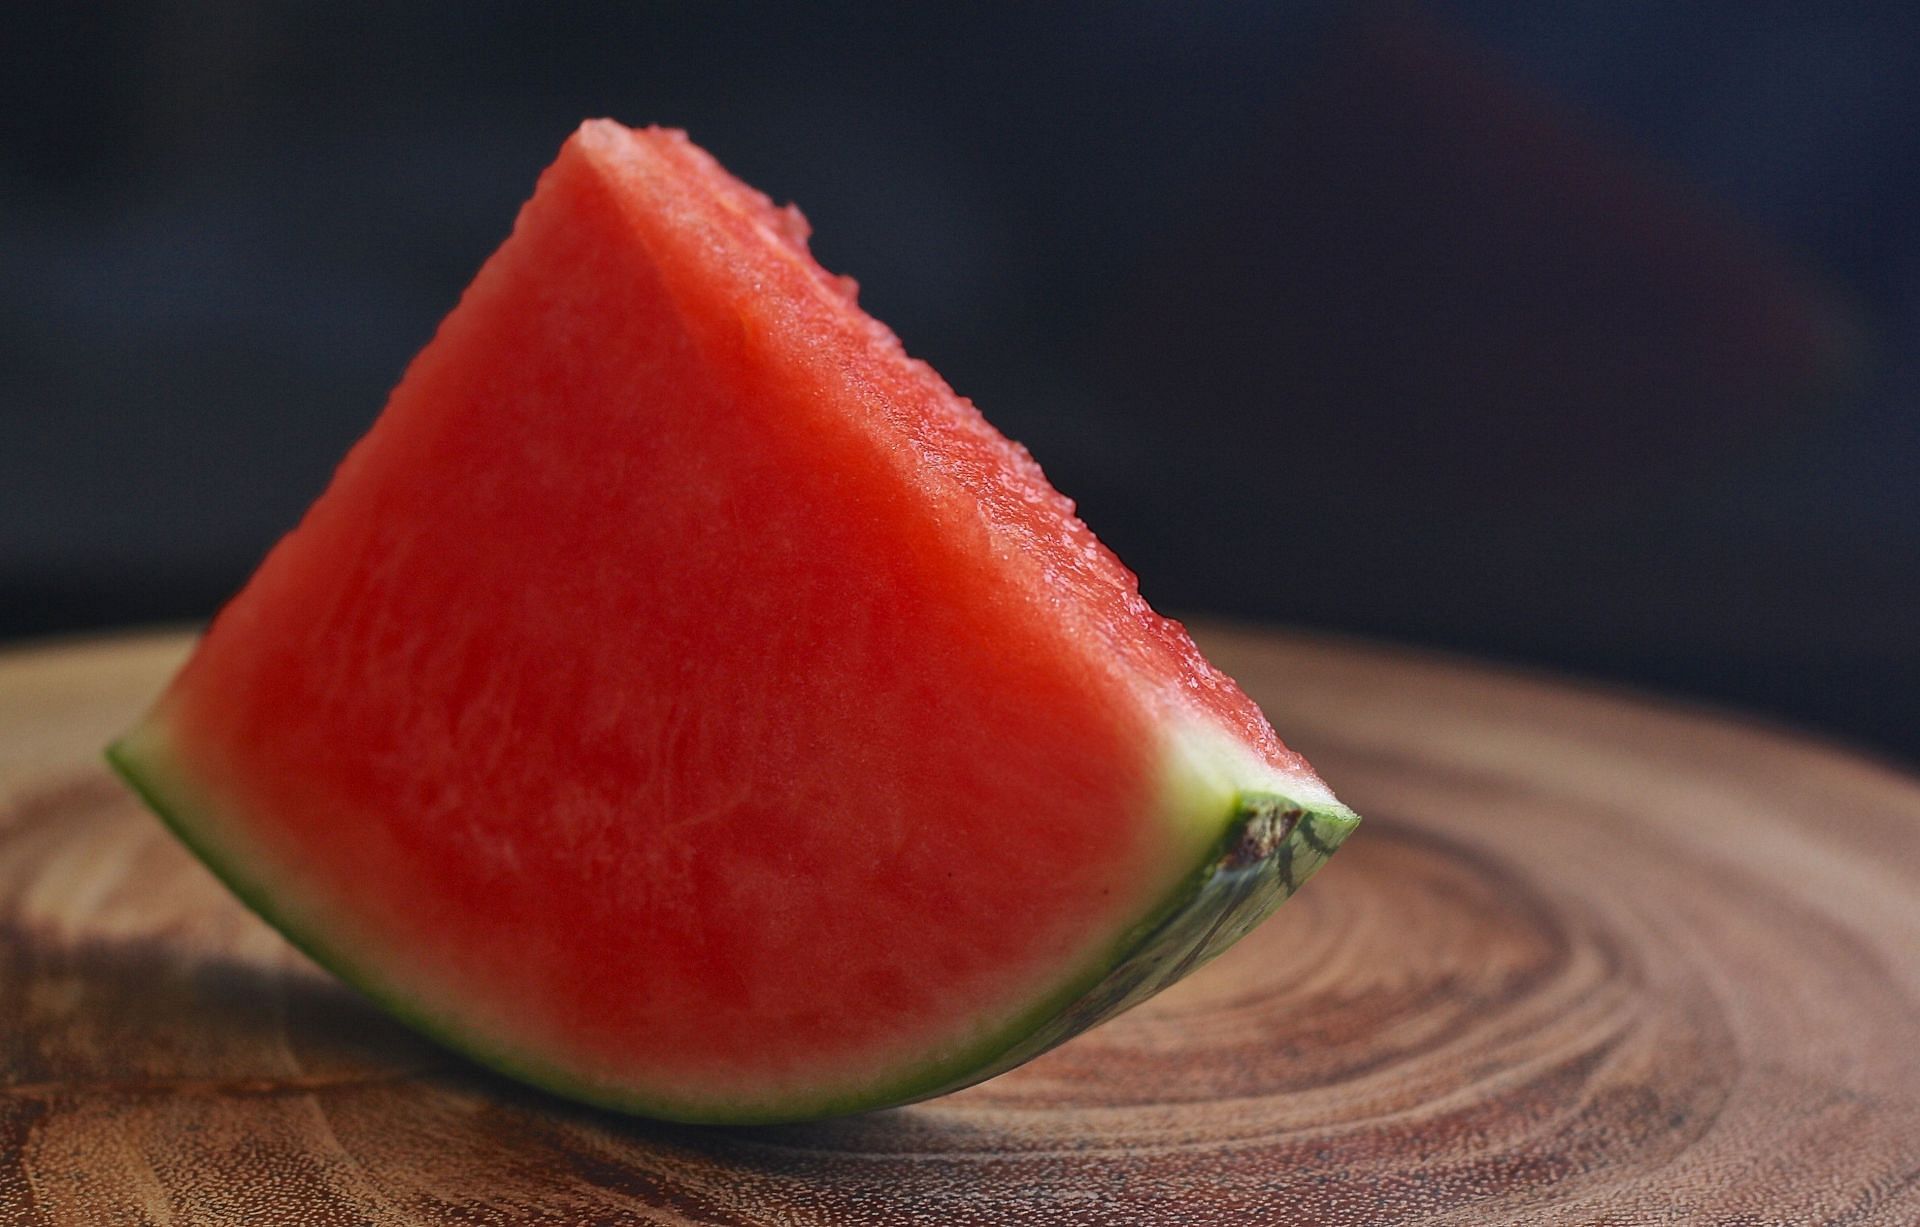 Watermelon for nutrition (Image via Pexels/Pixabay)